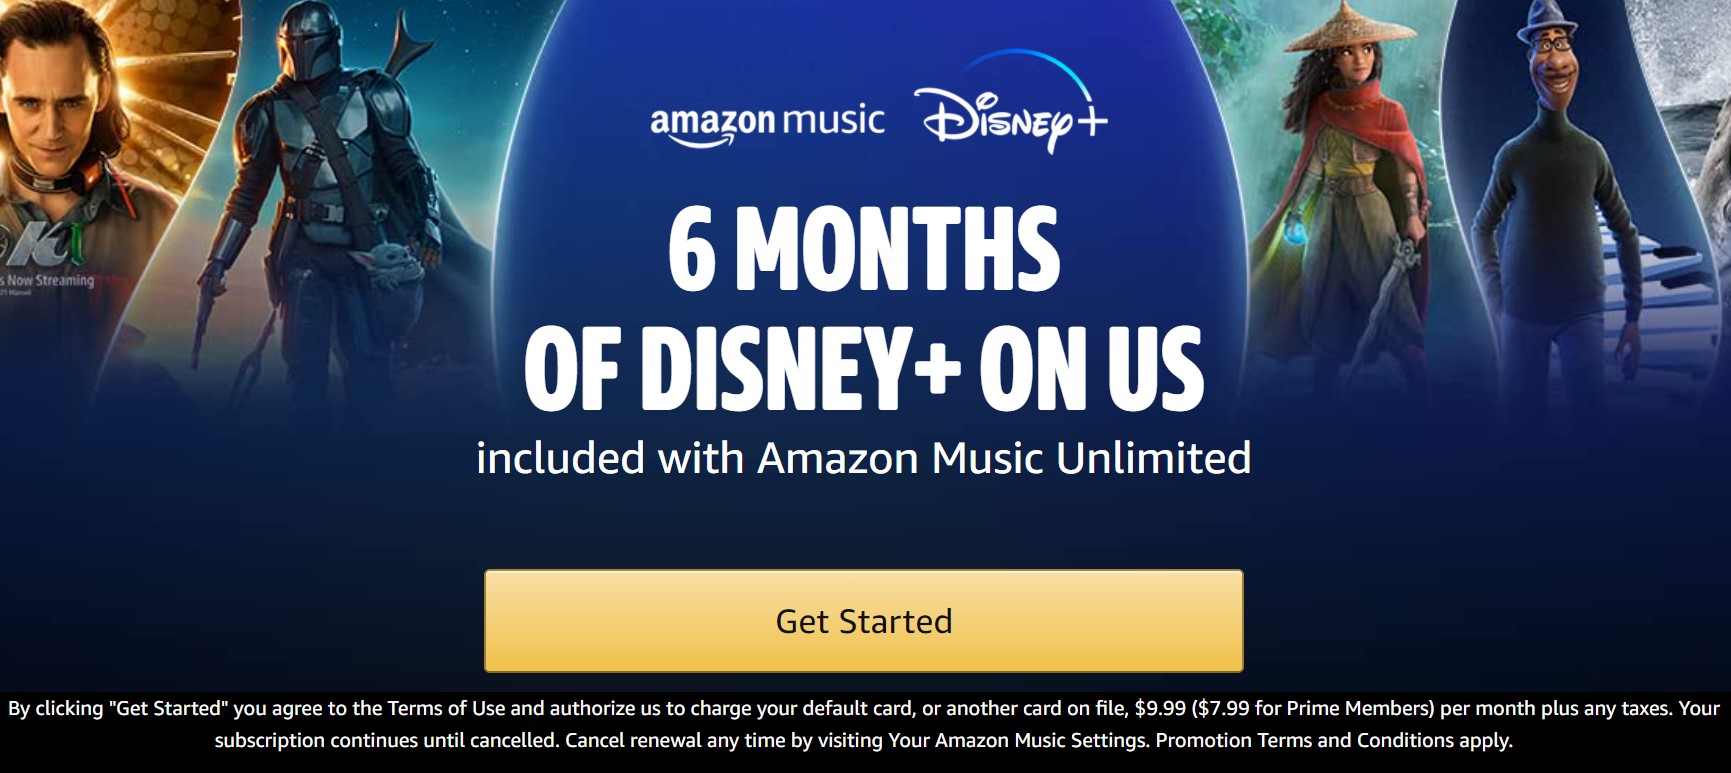 Amazon Music and Disney Plus Promo Image 1